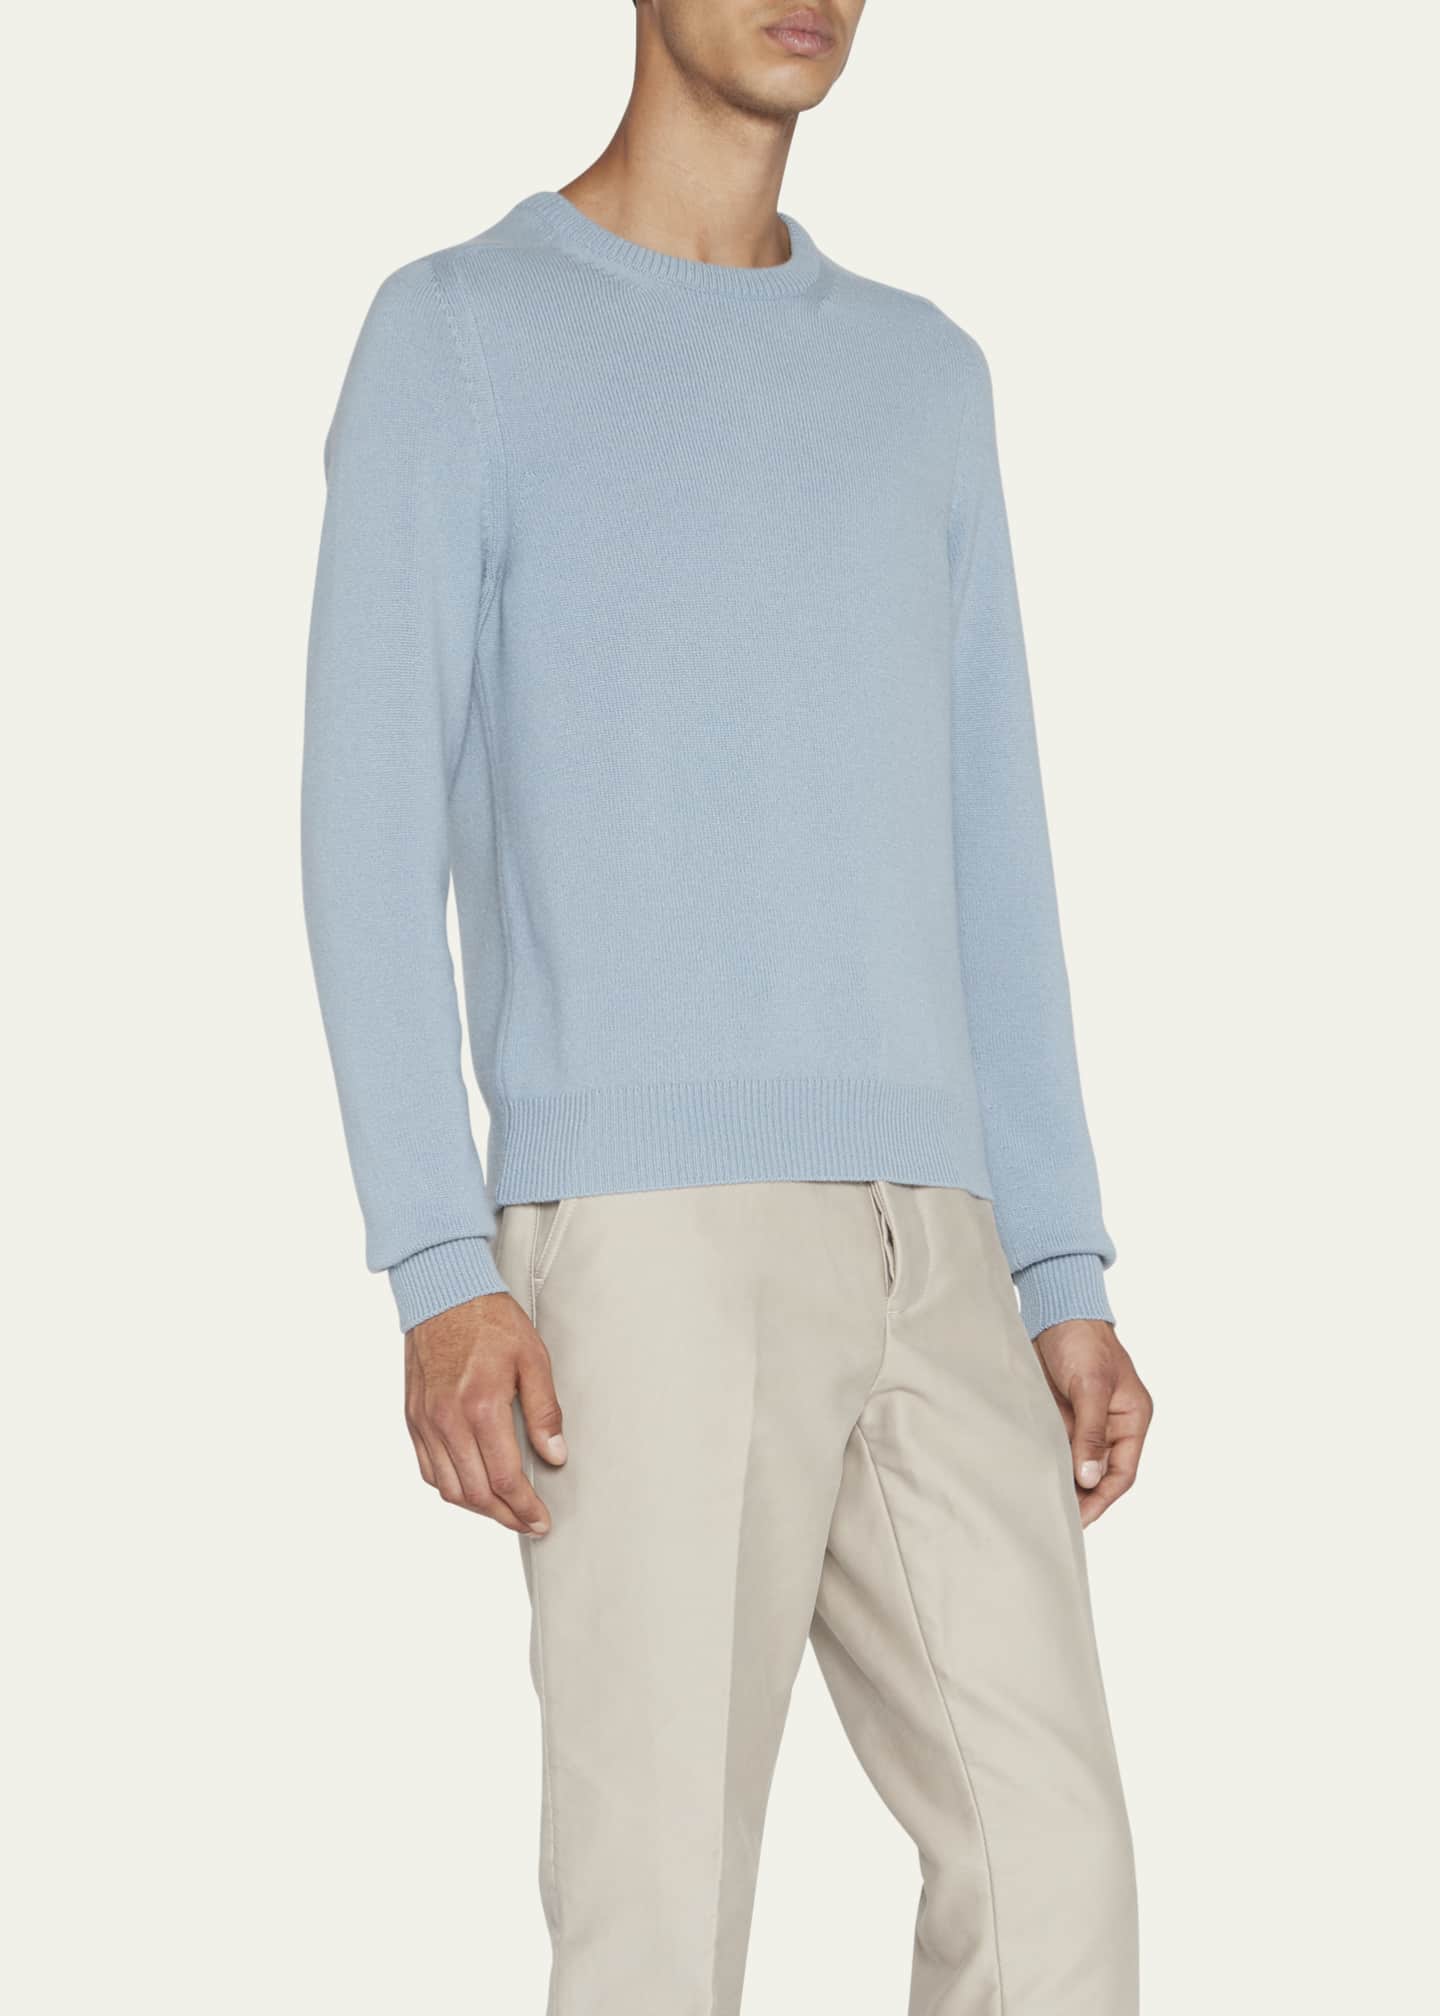 TOM FORD Men's Cashmere Crewneck Sweater - Bergdorf Goodman